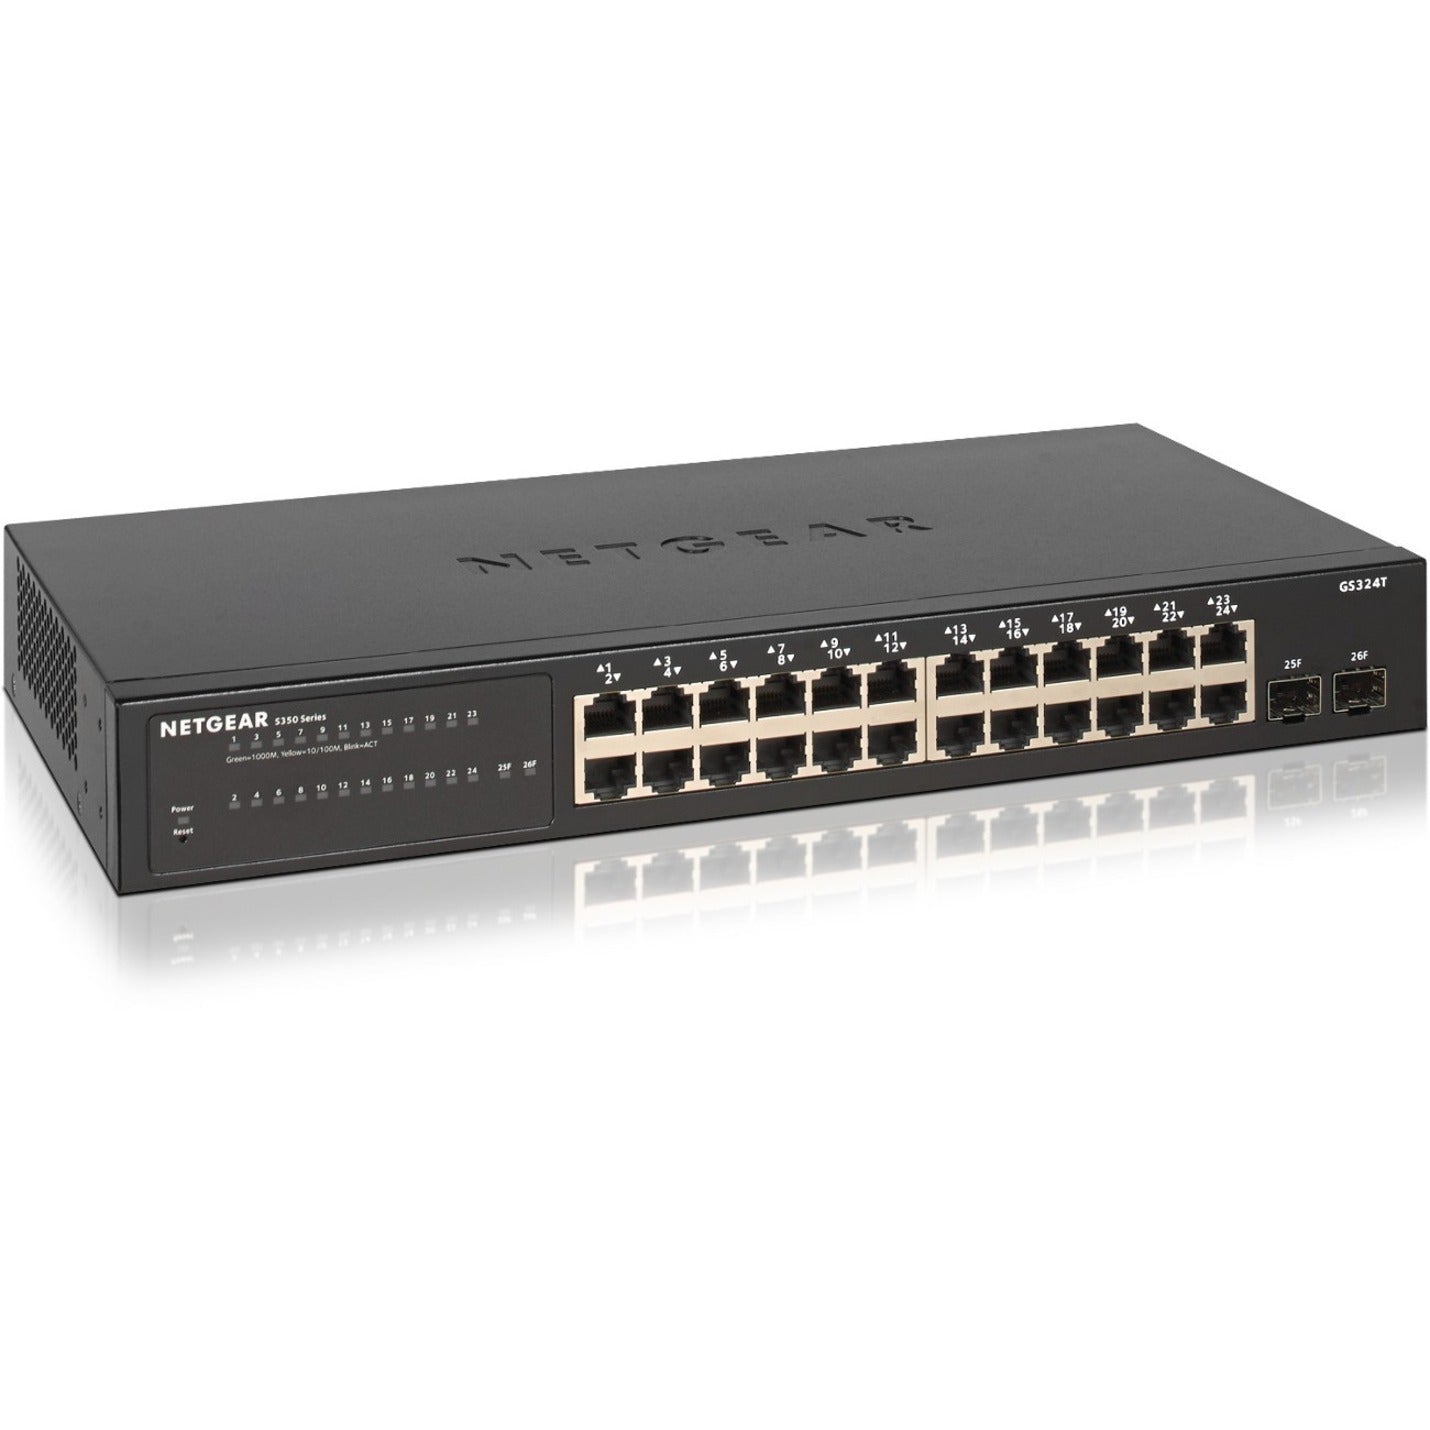 Netgear GS324T-100NAS S350 GS324T Ethernet Switch, 24 Port Gigabit Ethernet Network, 2 x Gigabit Ethernet Expansion Slot, Manageable